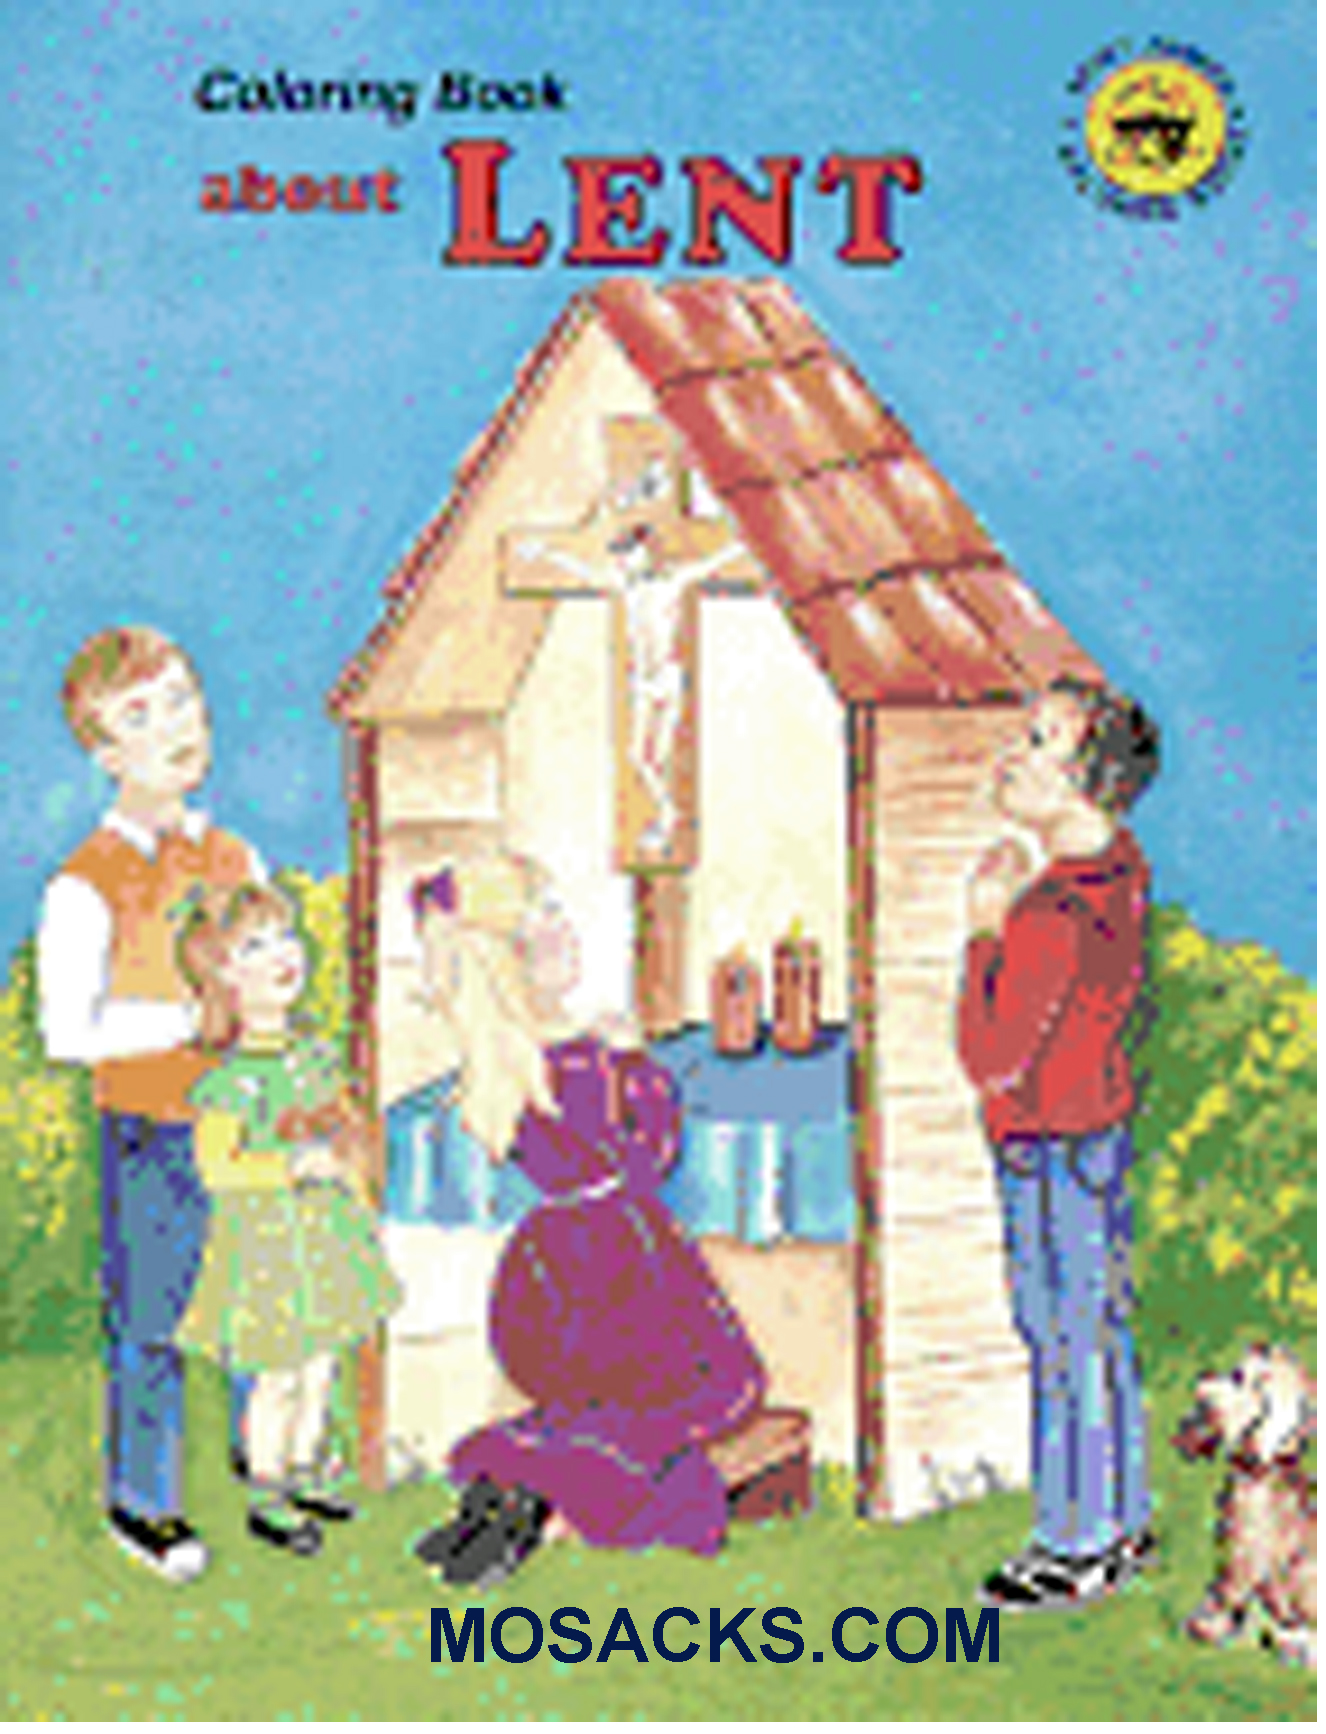 St Joseph 32 page Coloring Book About Lent-697